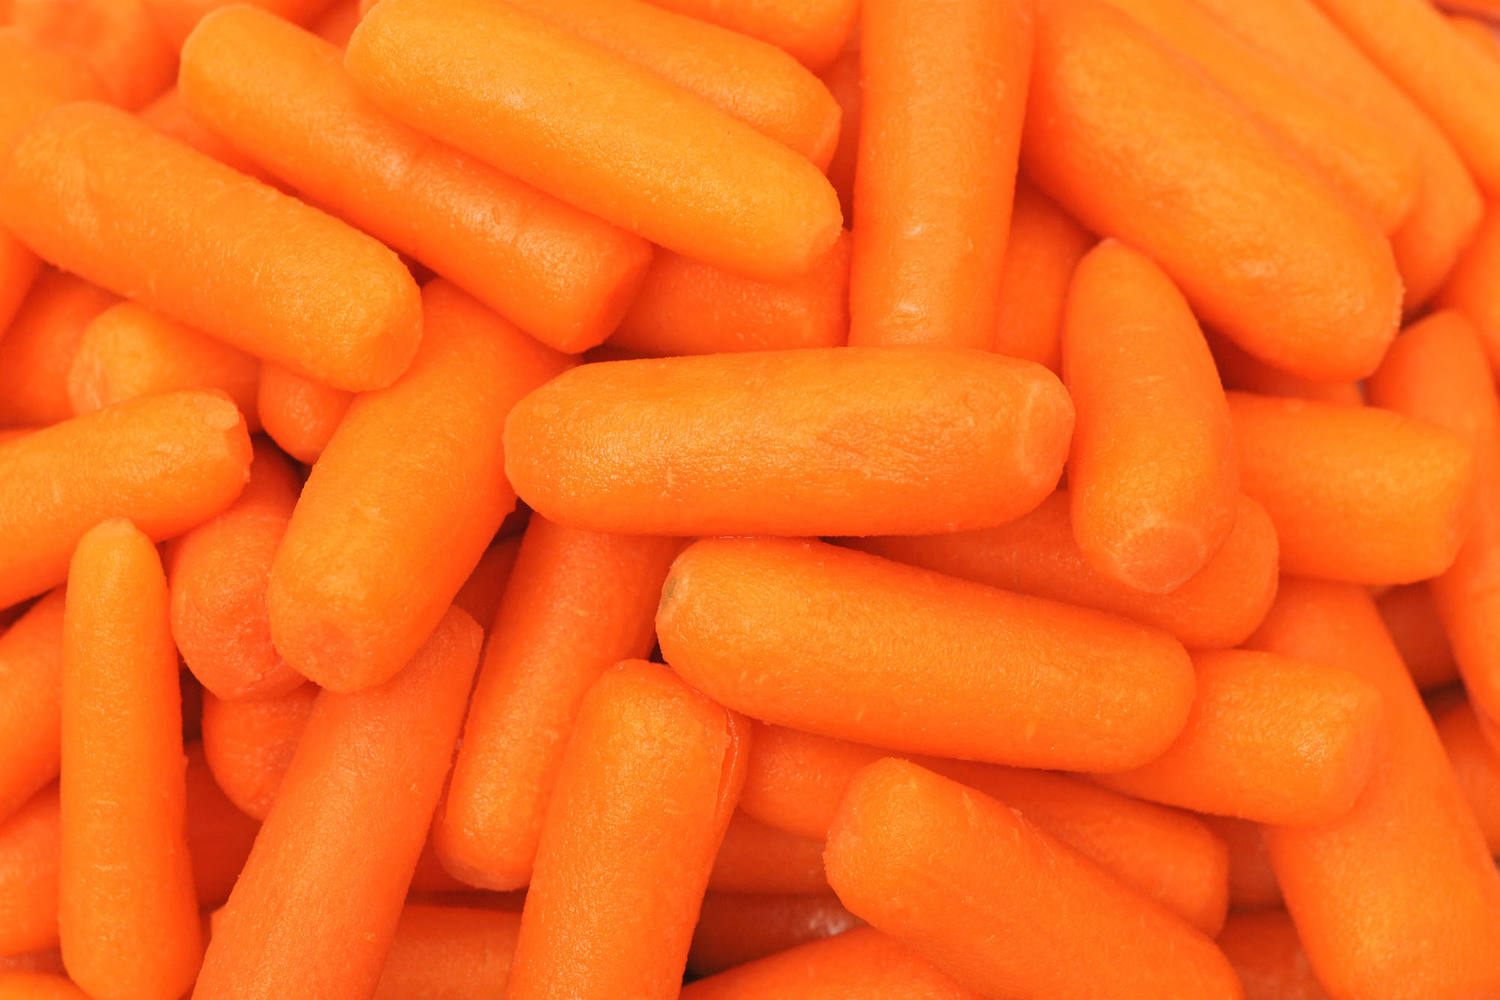 Baby carrots medium 1kg piece 3